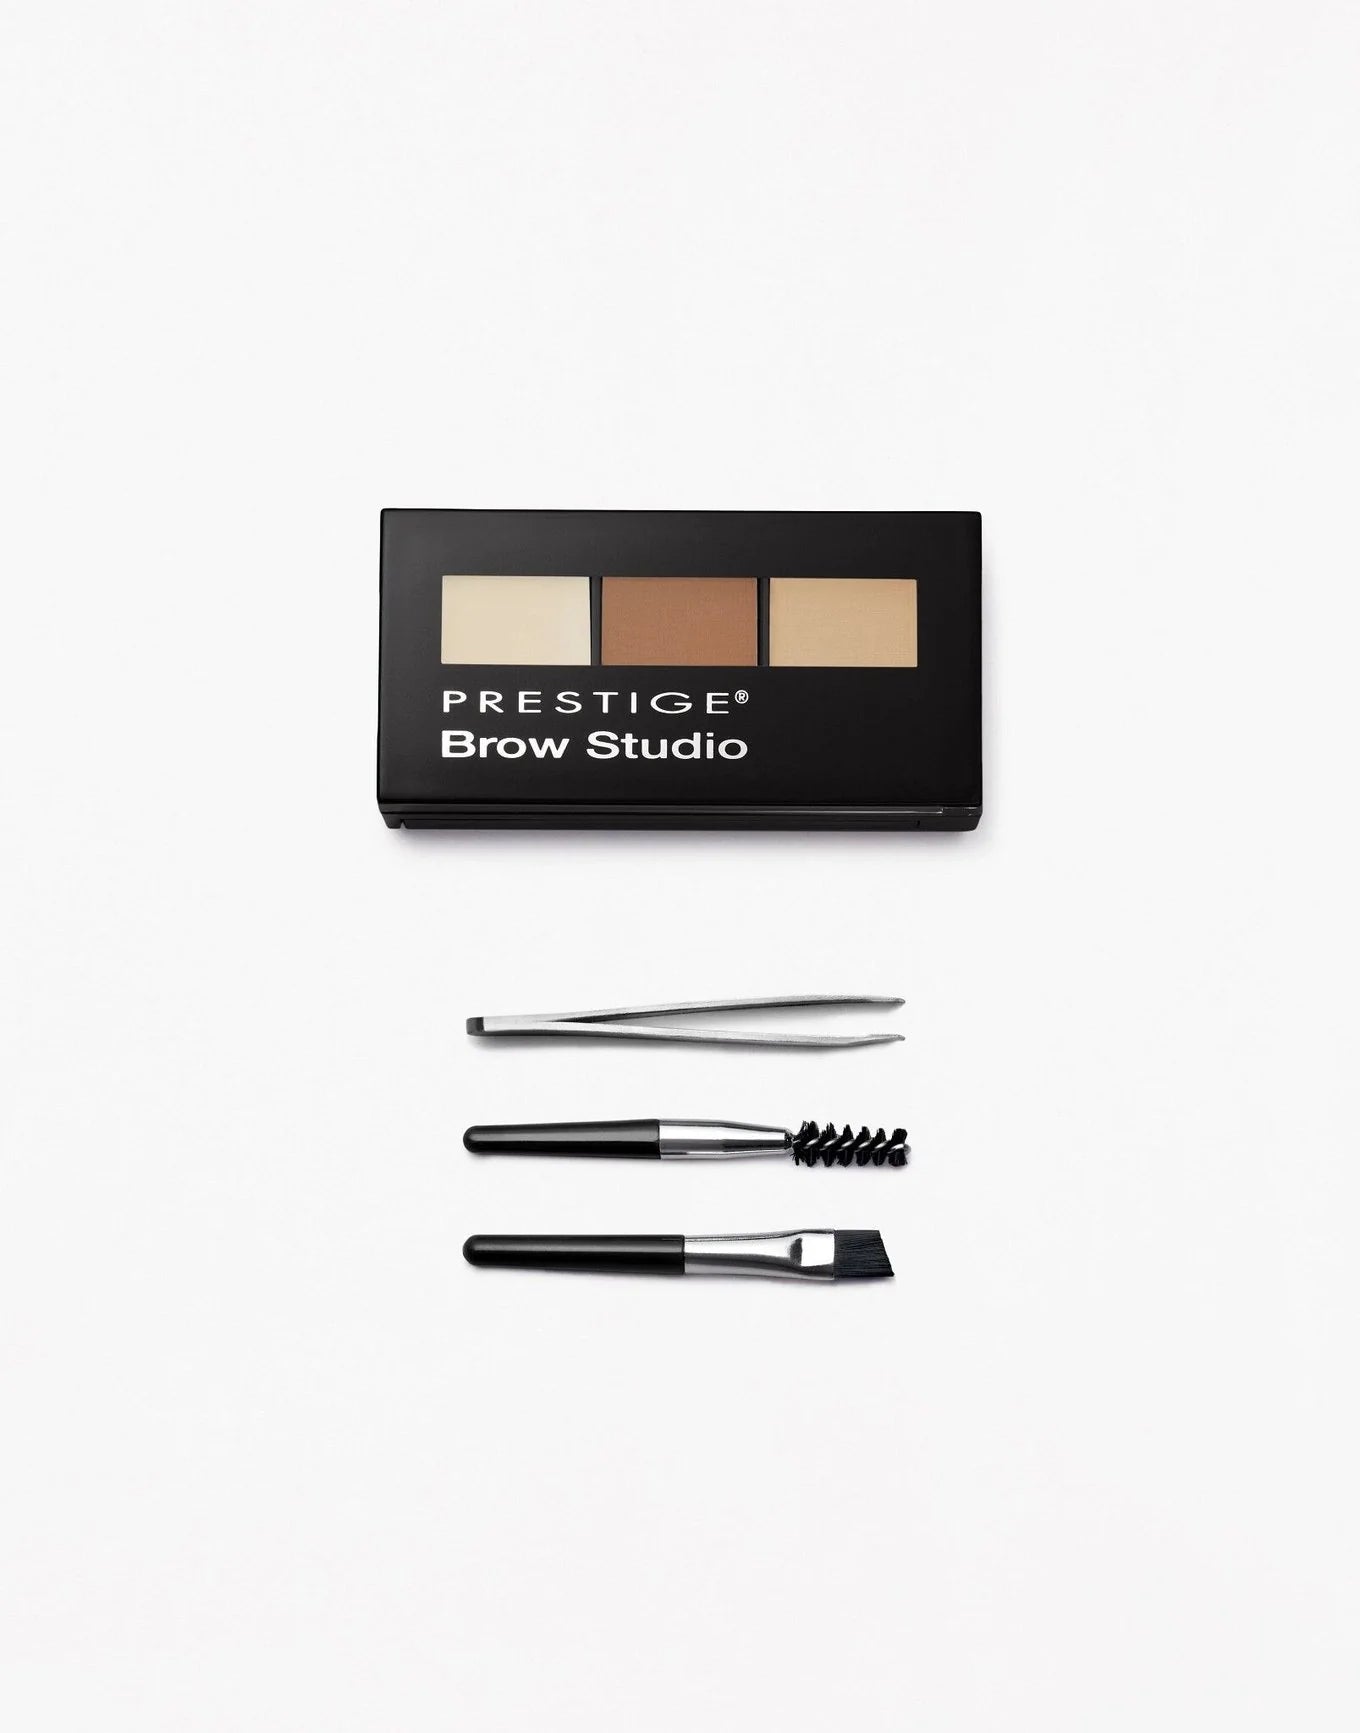  Prestige Cosmetics Brow Studio Kit, (BPS-01) Light